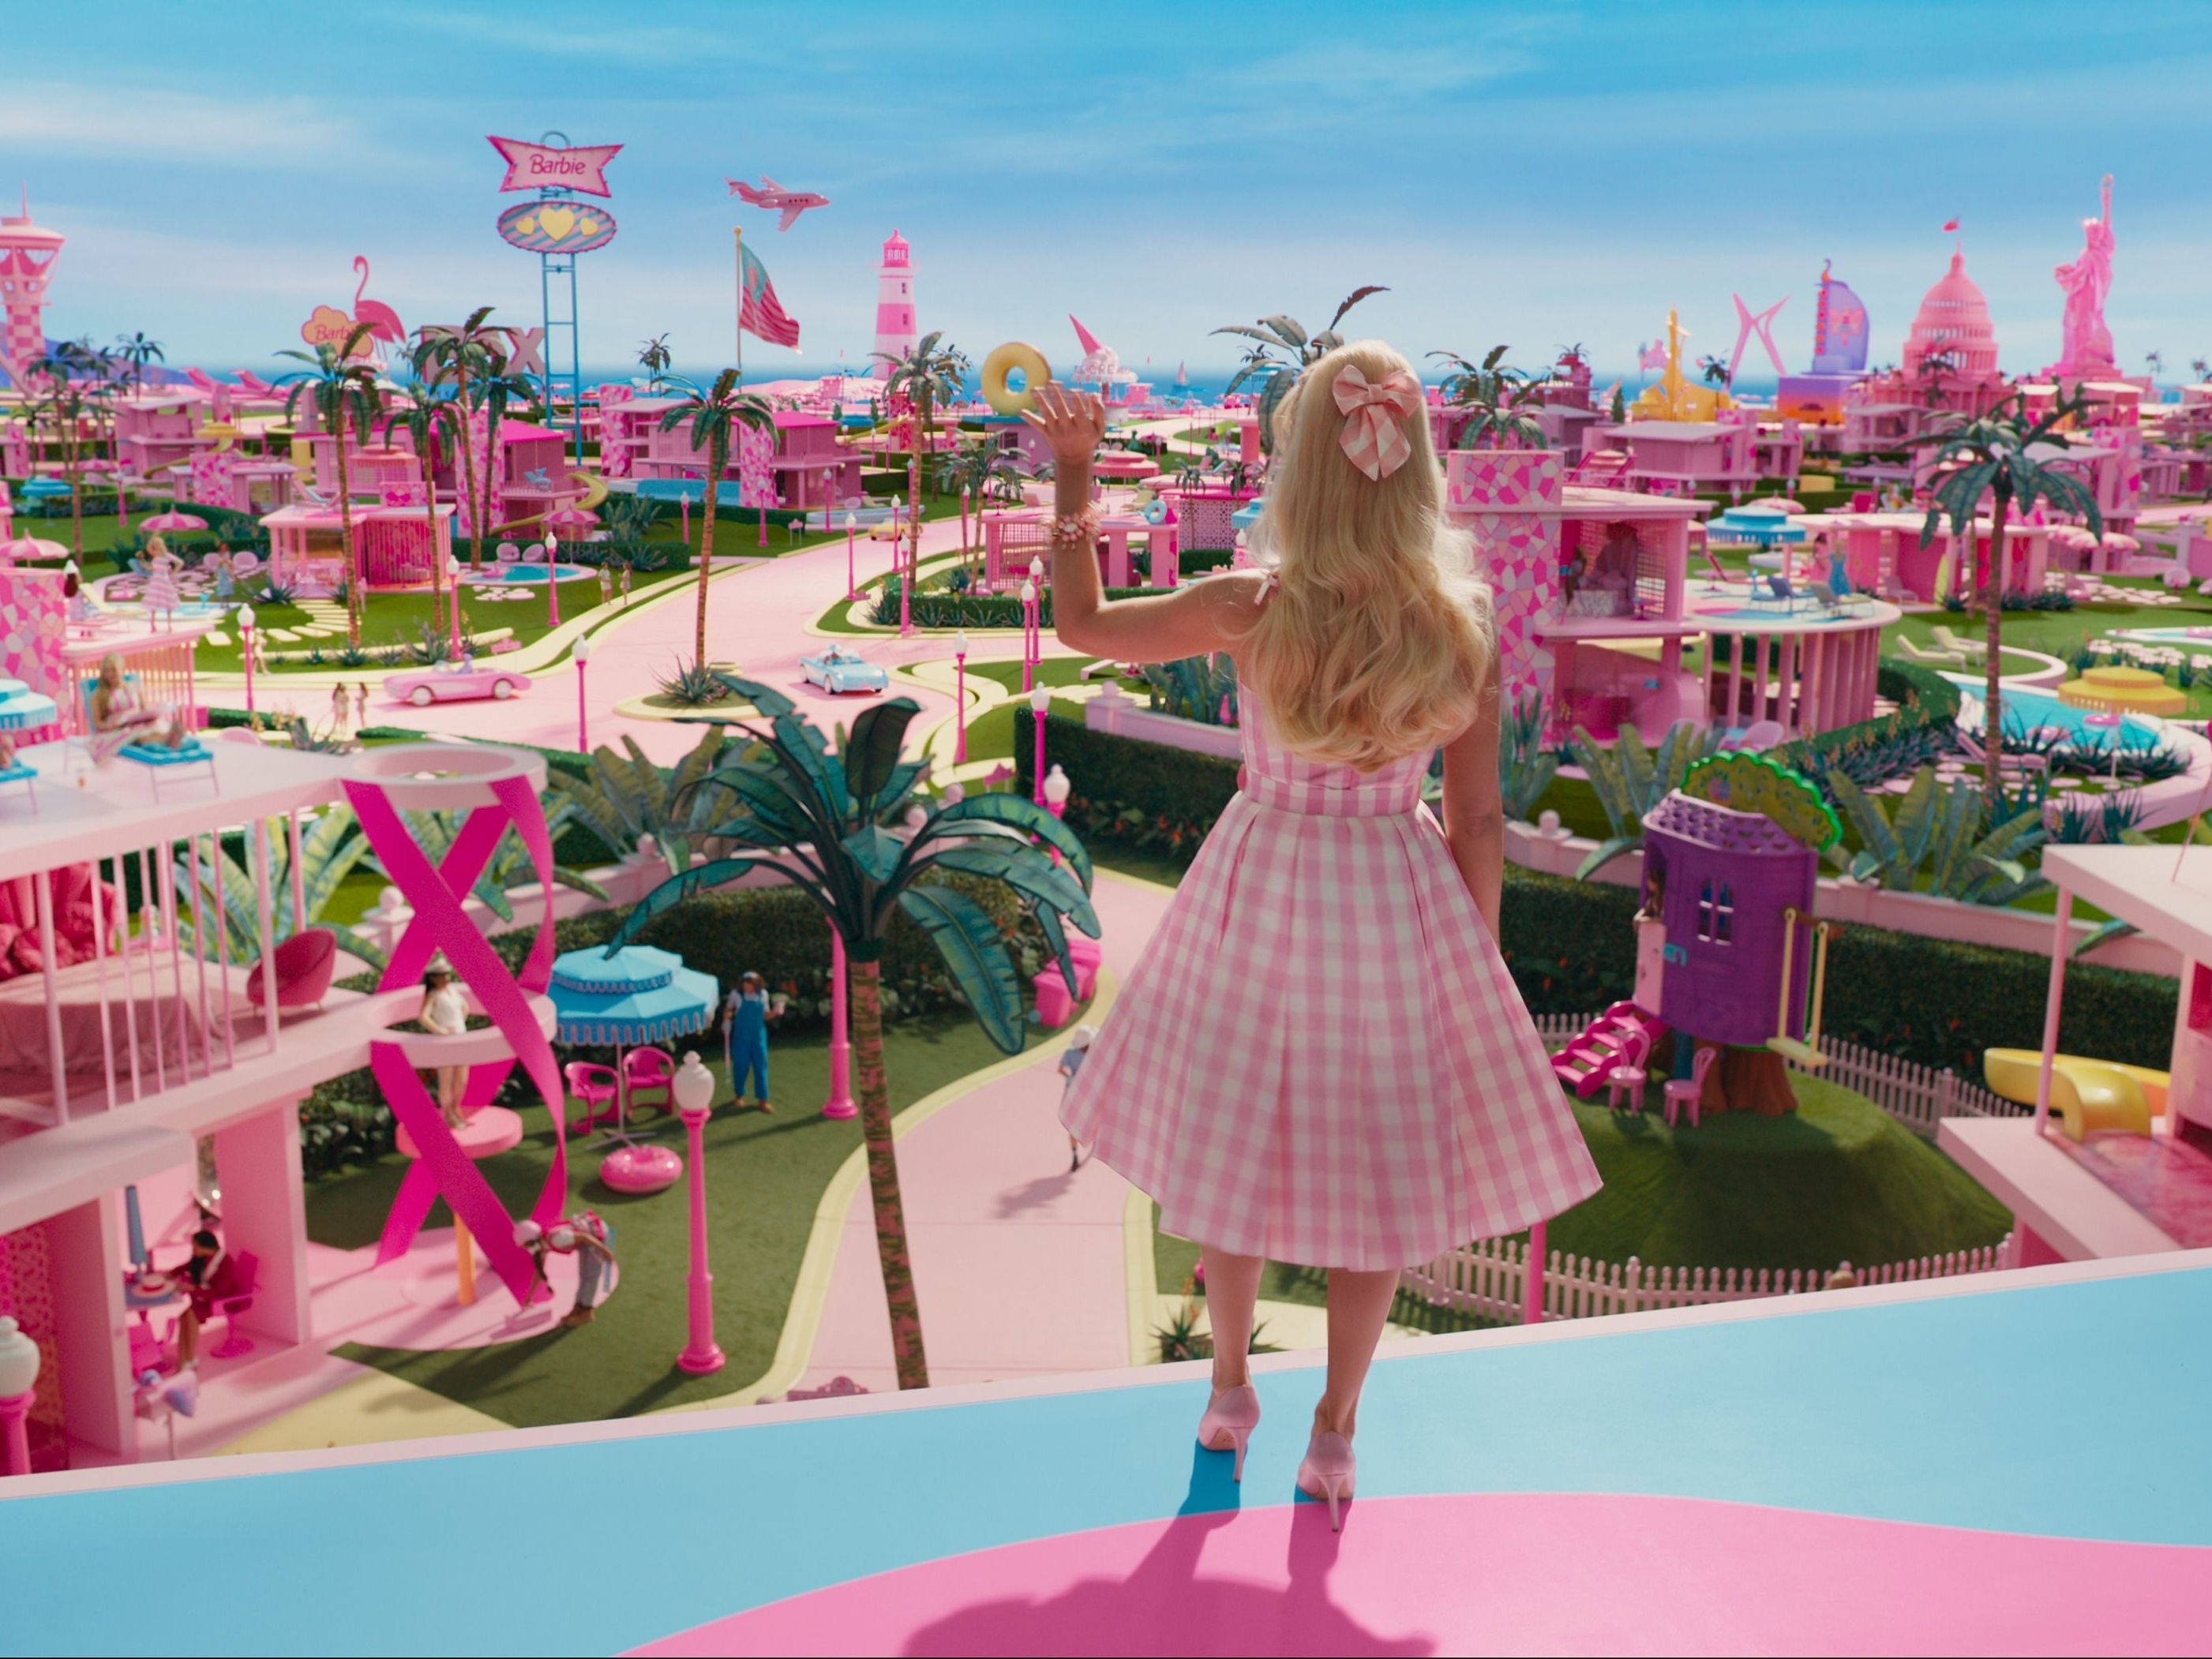 Conjunto Ken Filme Barbie 2023 Cosplay Traje Adulto / Infantil